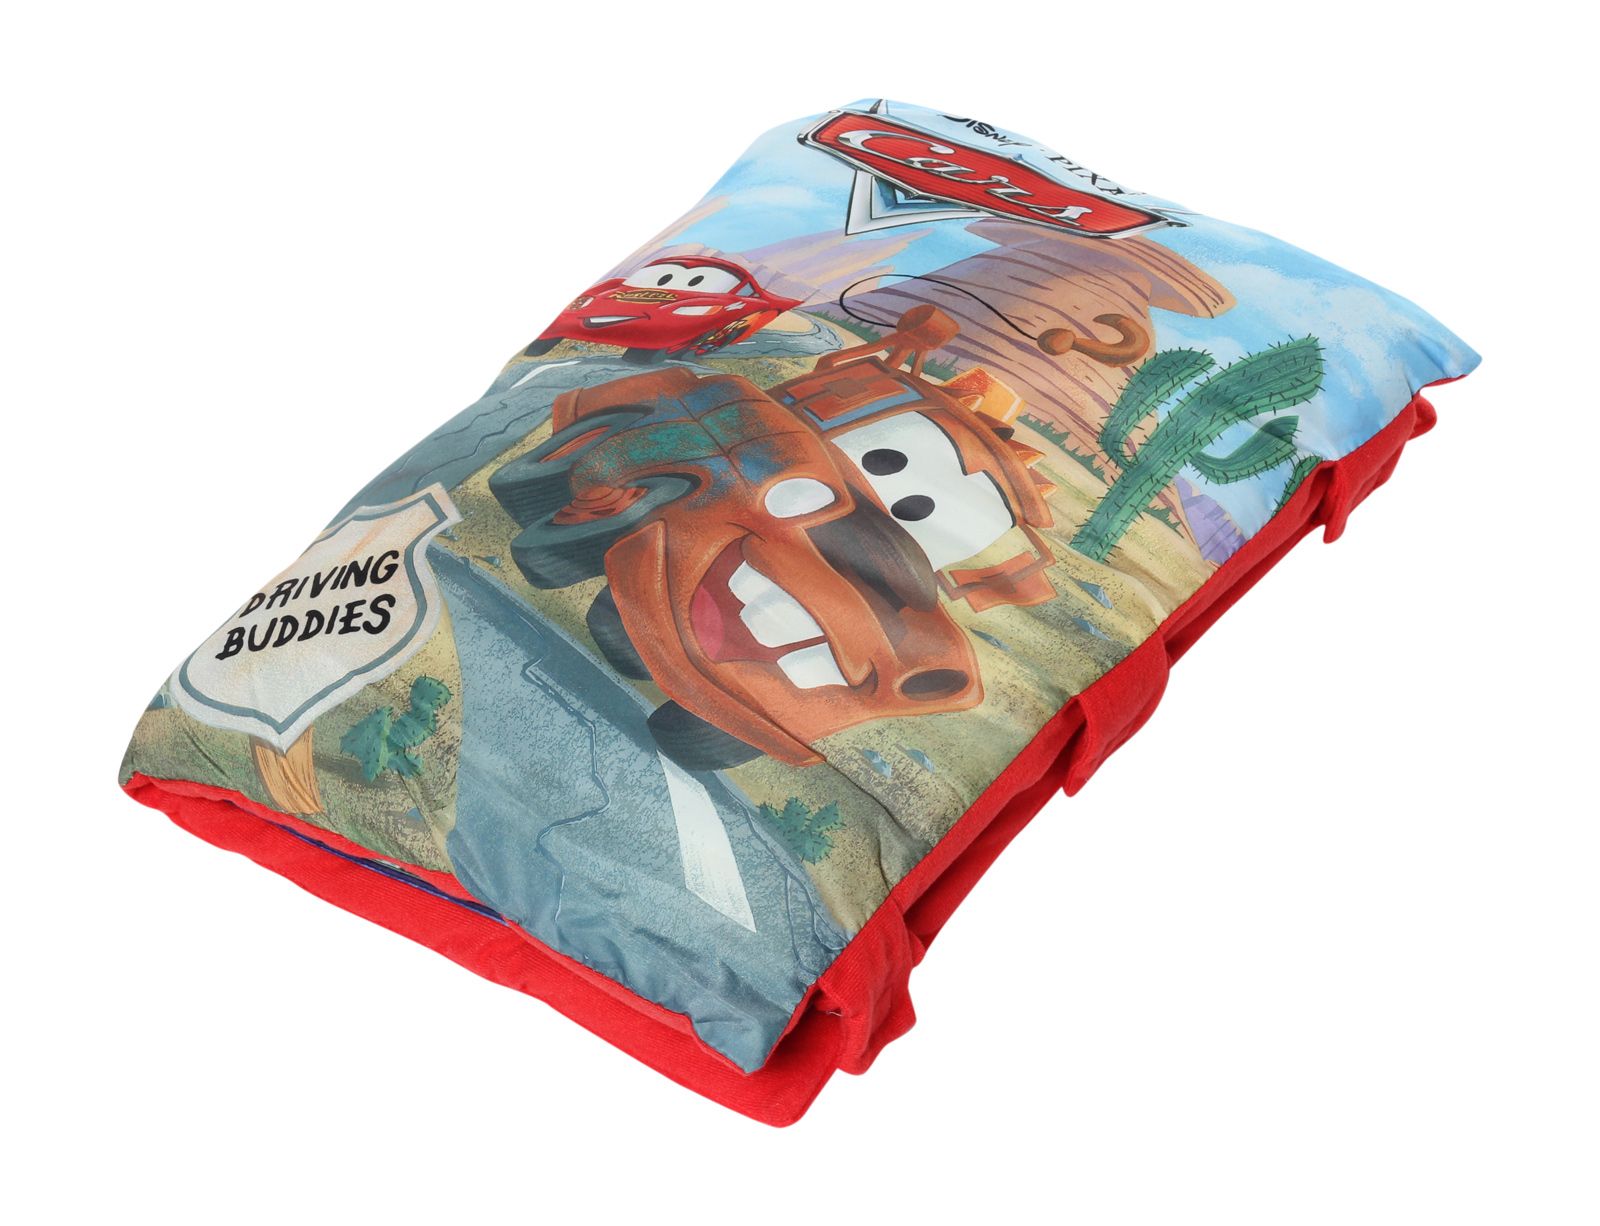 Disney Pixar Cars Story Book Pillow - Driving Buddies